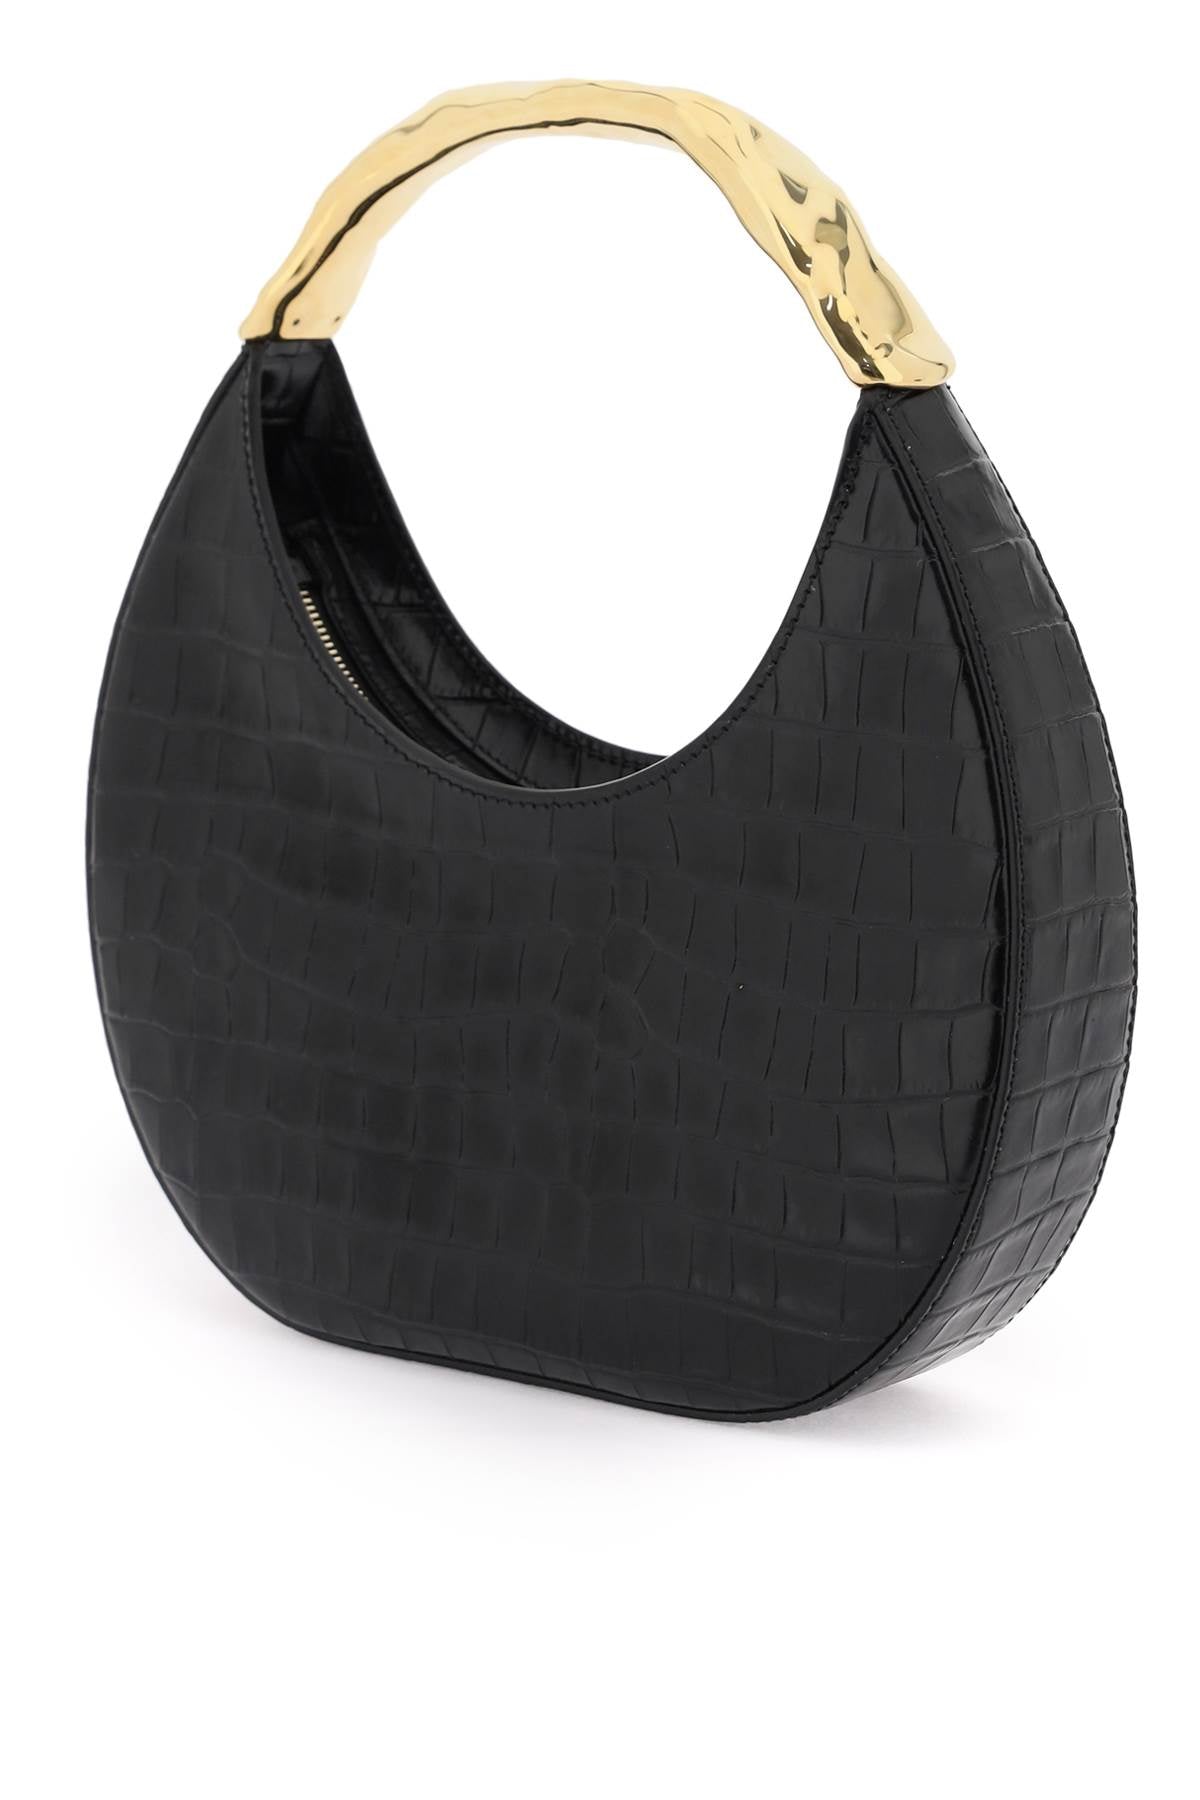 Baroque Croco-Embossed Black Hobo Handbag with Gold Metal Handle